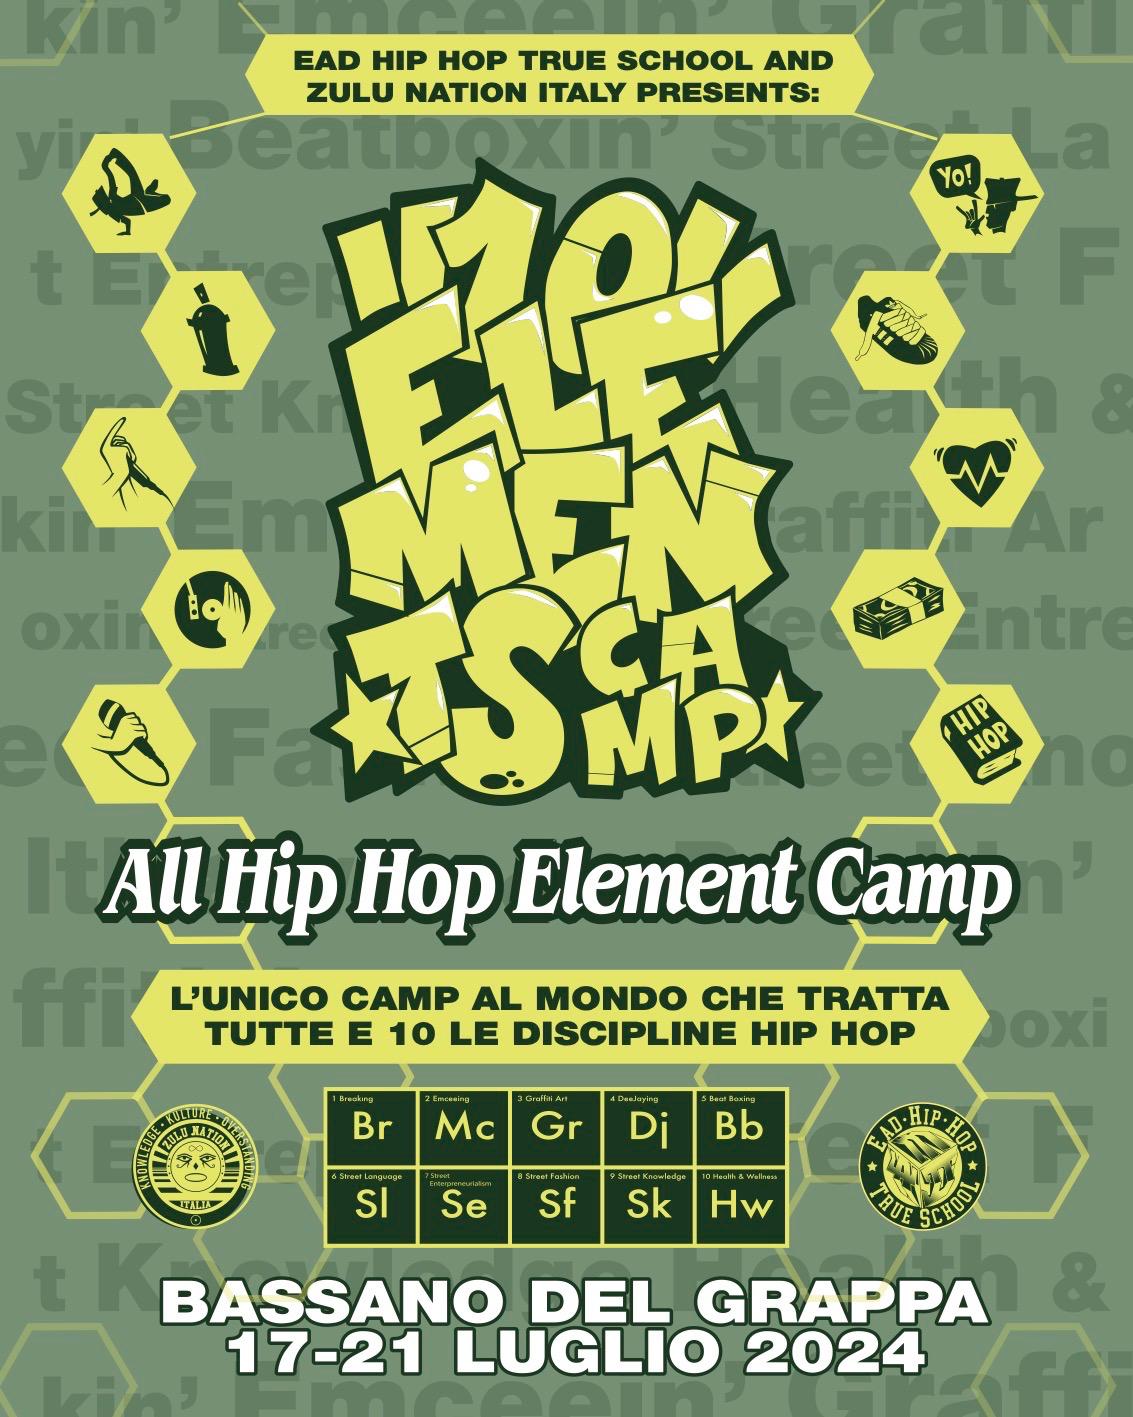 HipHopSeeds Sponsor Event: 10 Elements Hip Hop Camp VOL.2 -17/21 luglio- Bassano del Grappa